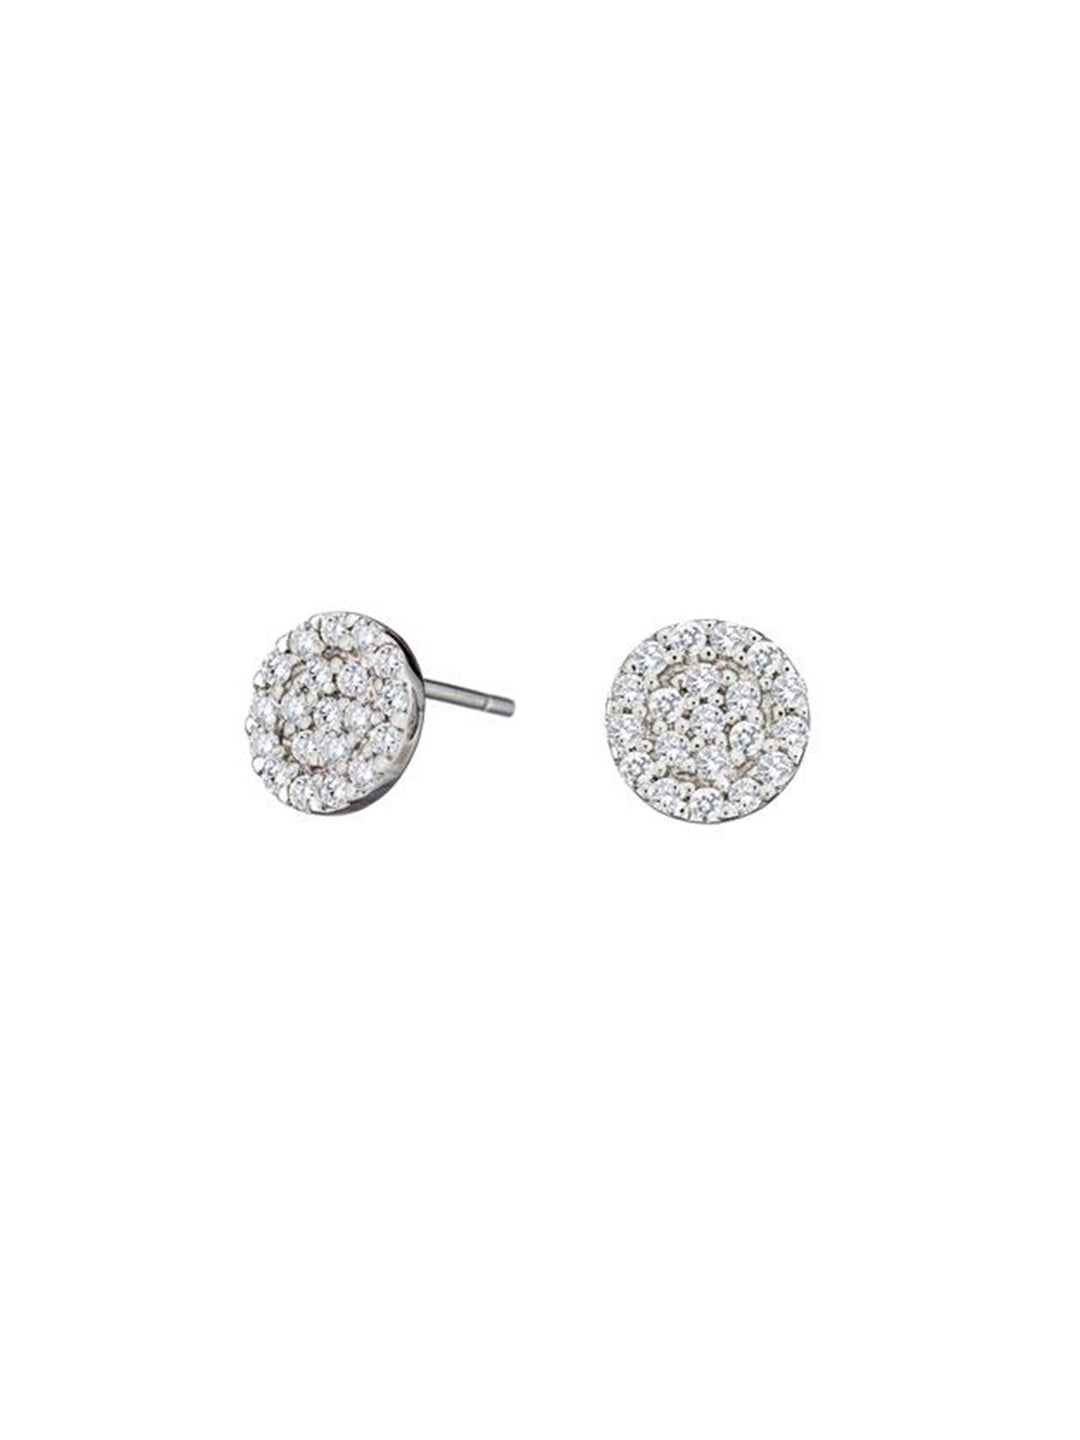 first pair diamond earrings